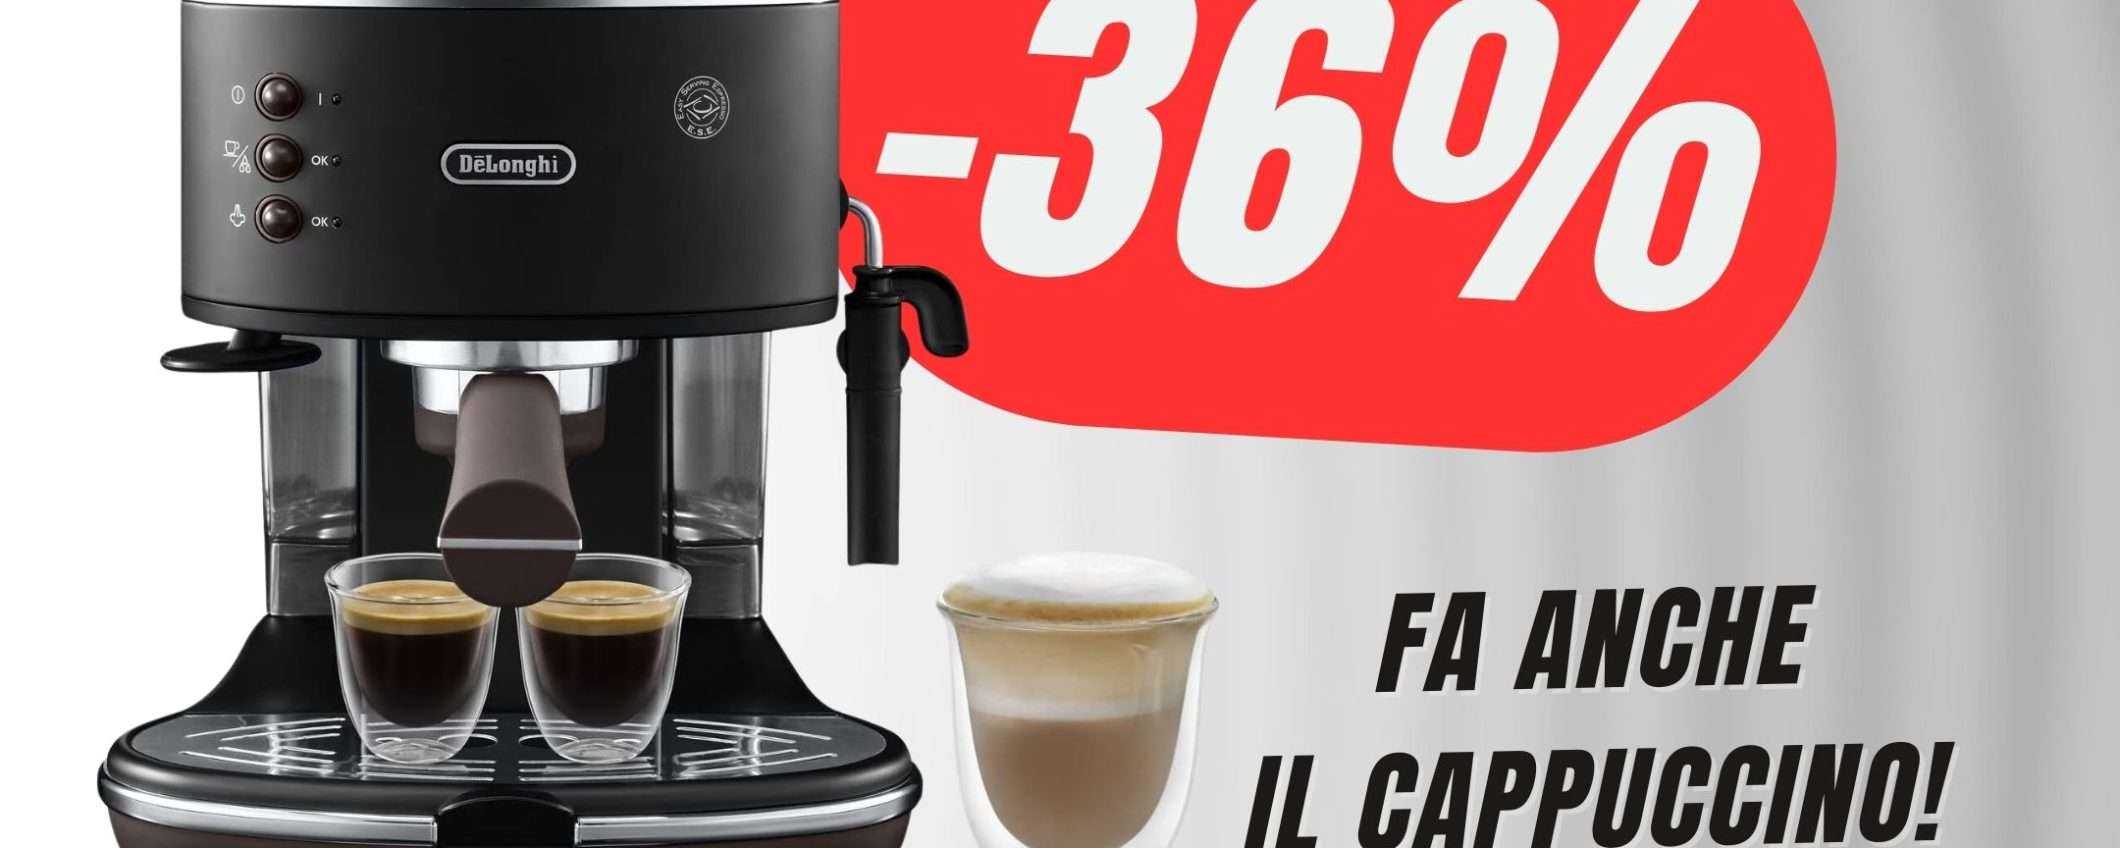 -36% per la MACCHINA da CAFFÈ vintage di De'Longhi!